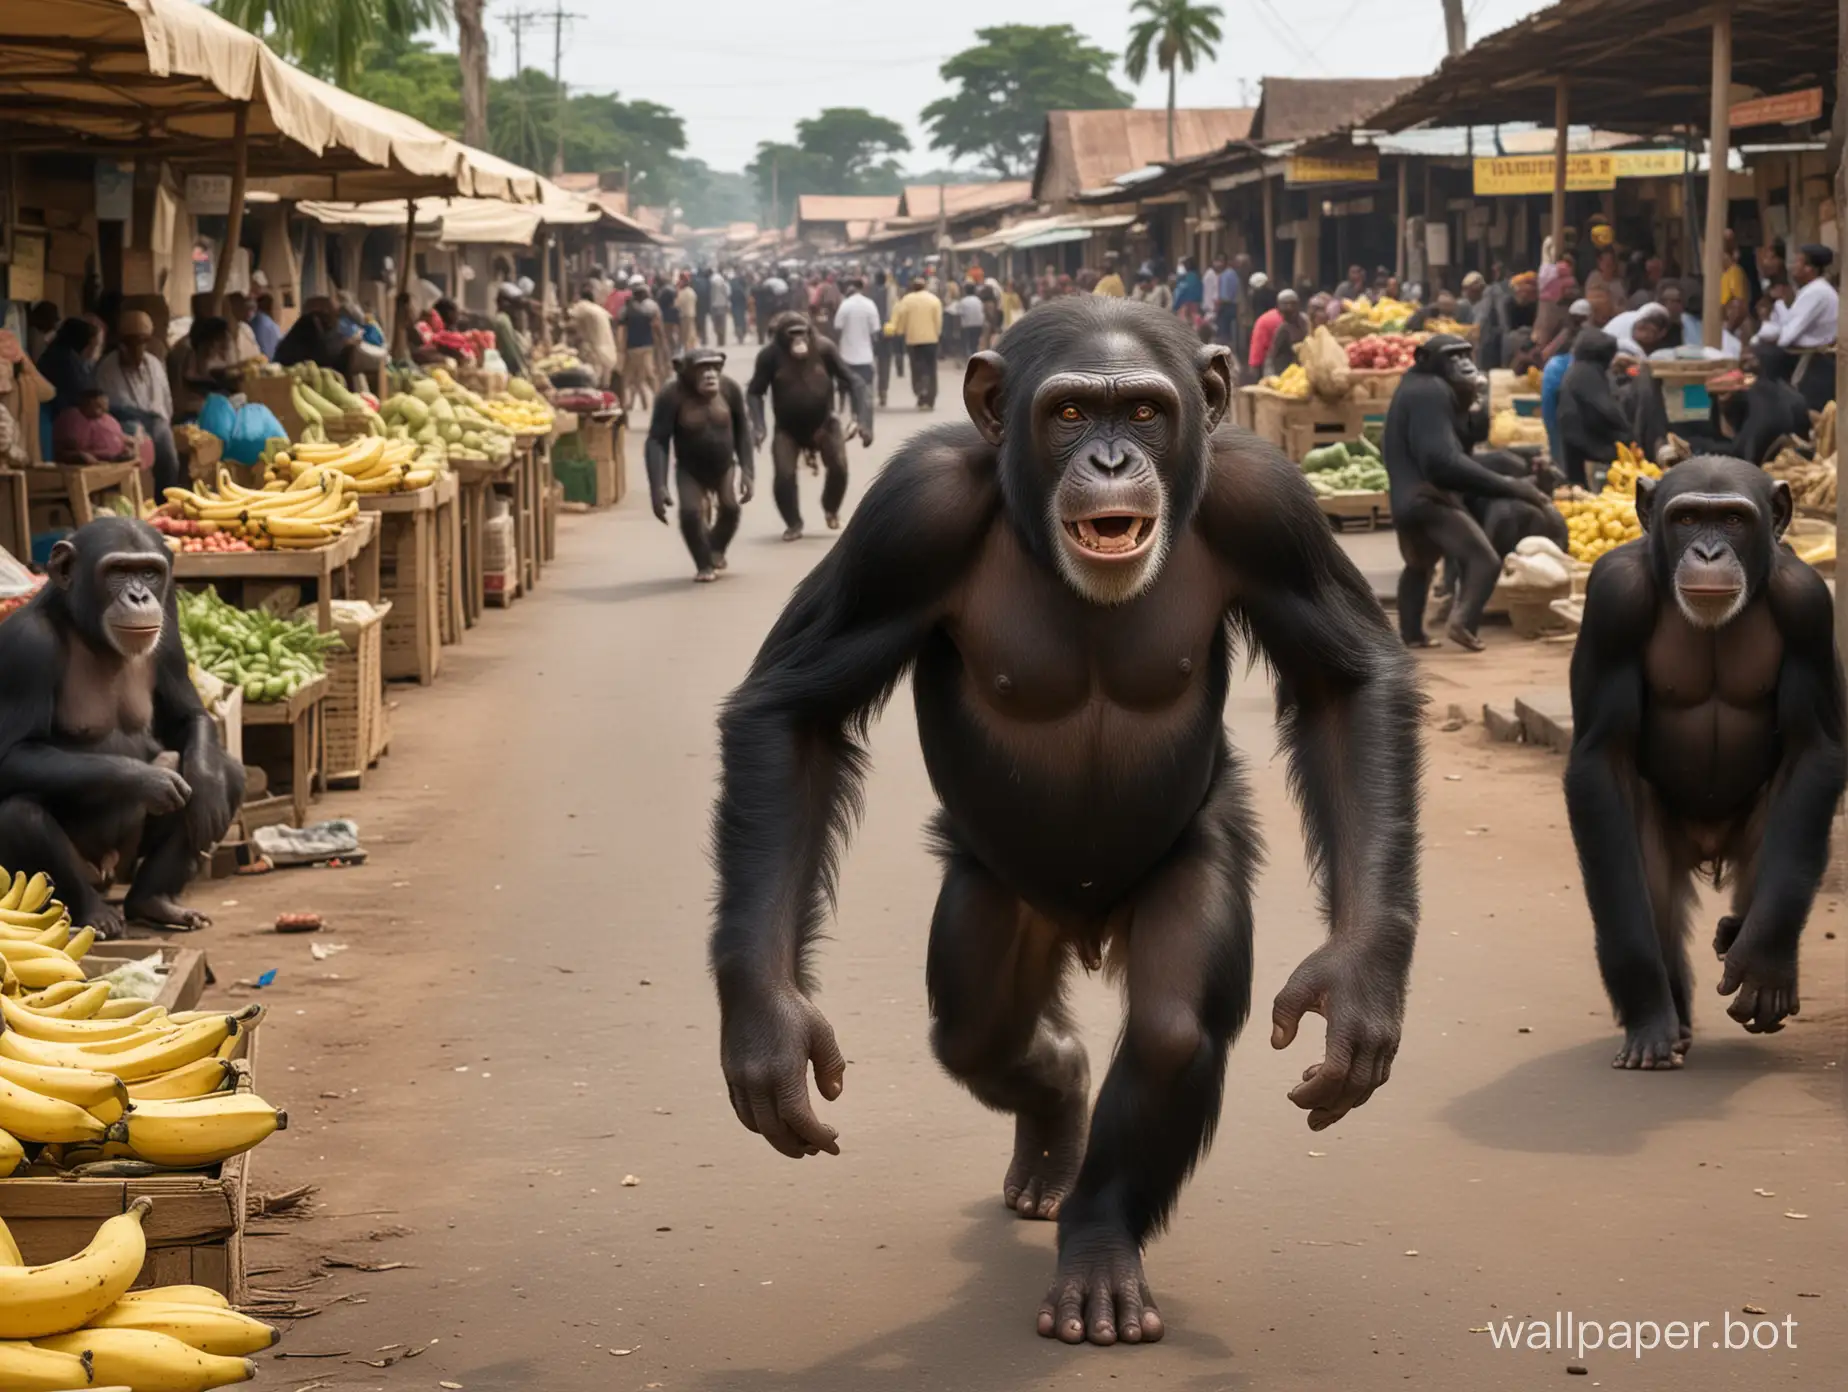 Mischievous-Chimpanzee-Steals-Bananas-at-African-Market